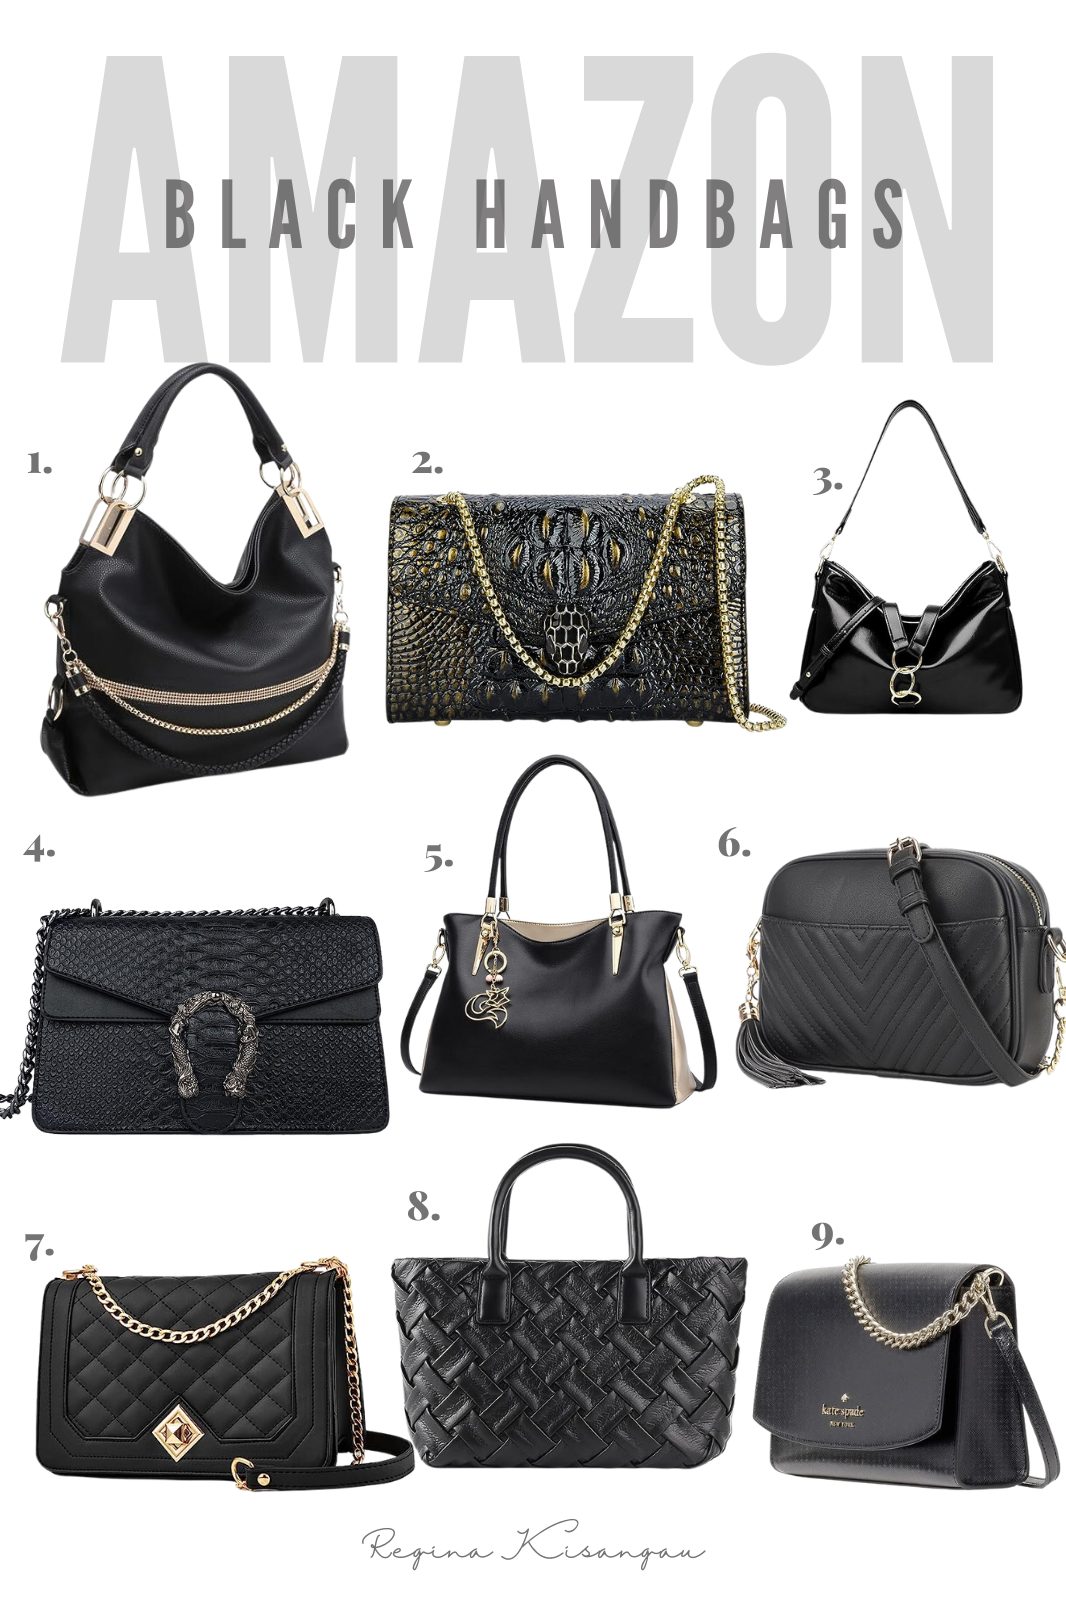 Black Handbags on Amazon 